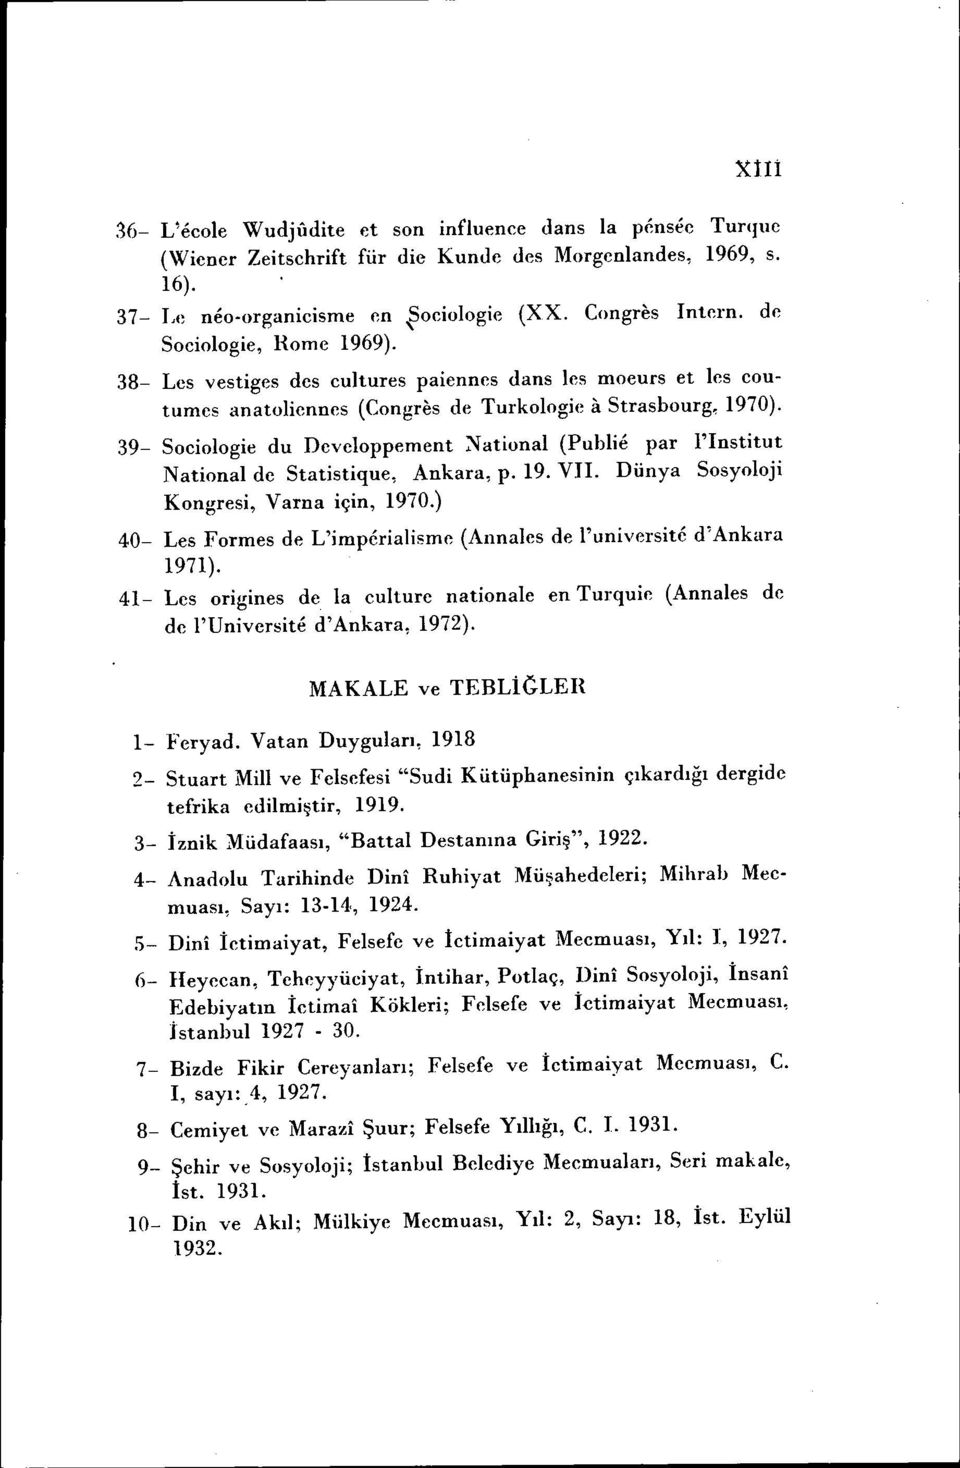 39- Soeiologie du Devdoppement ~ational (Publie par l'institut National de Statistique, Ankara, p. 19. VII. Dünya Sosyoloji Kongresi, Vama için, 1970.